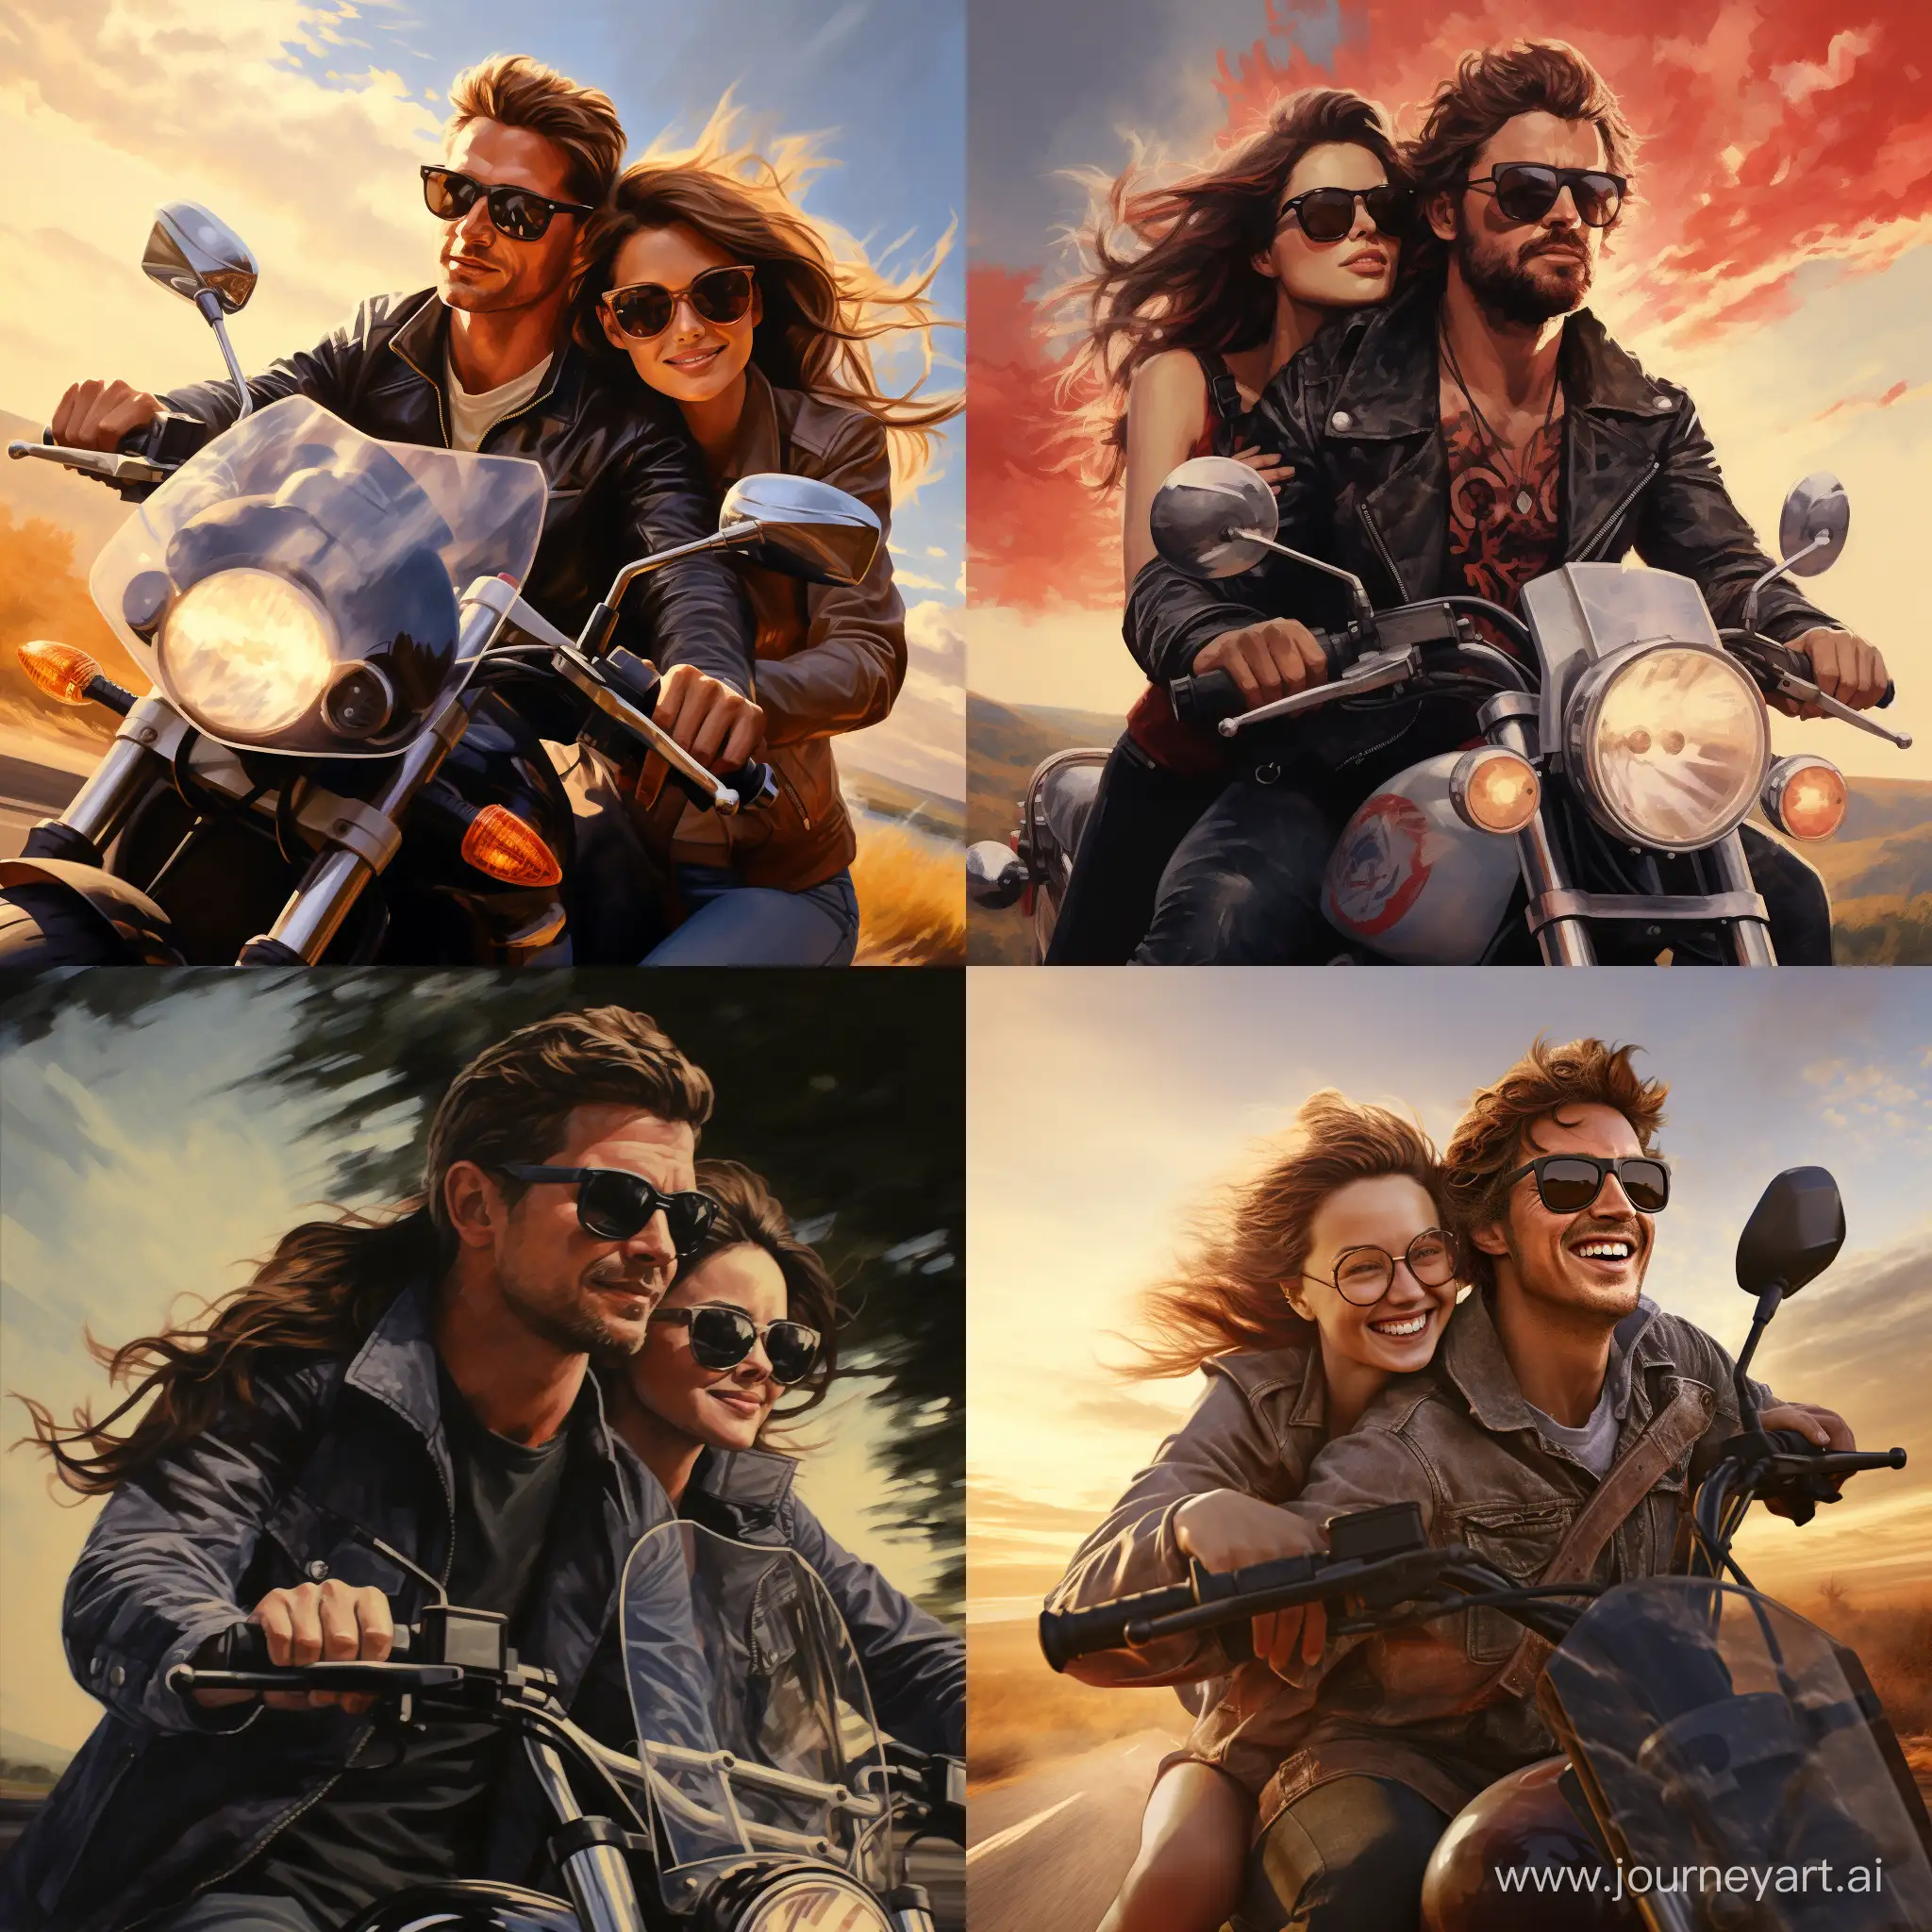 Adventurous-Couple-Riding-Motorcycle-Together-Romantic-Motorbike-Journey